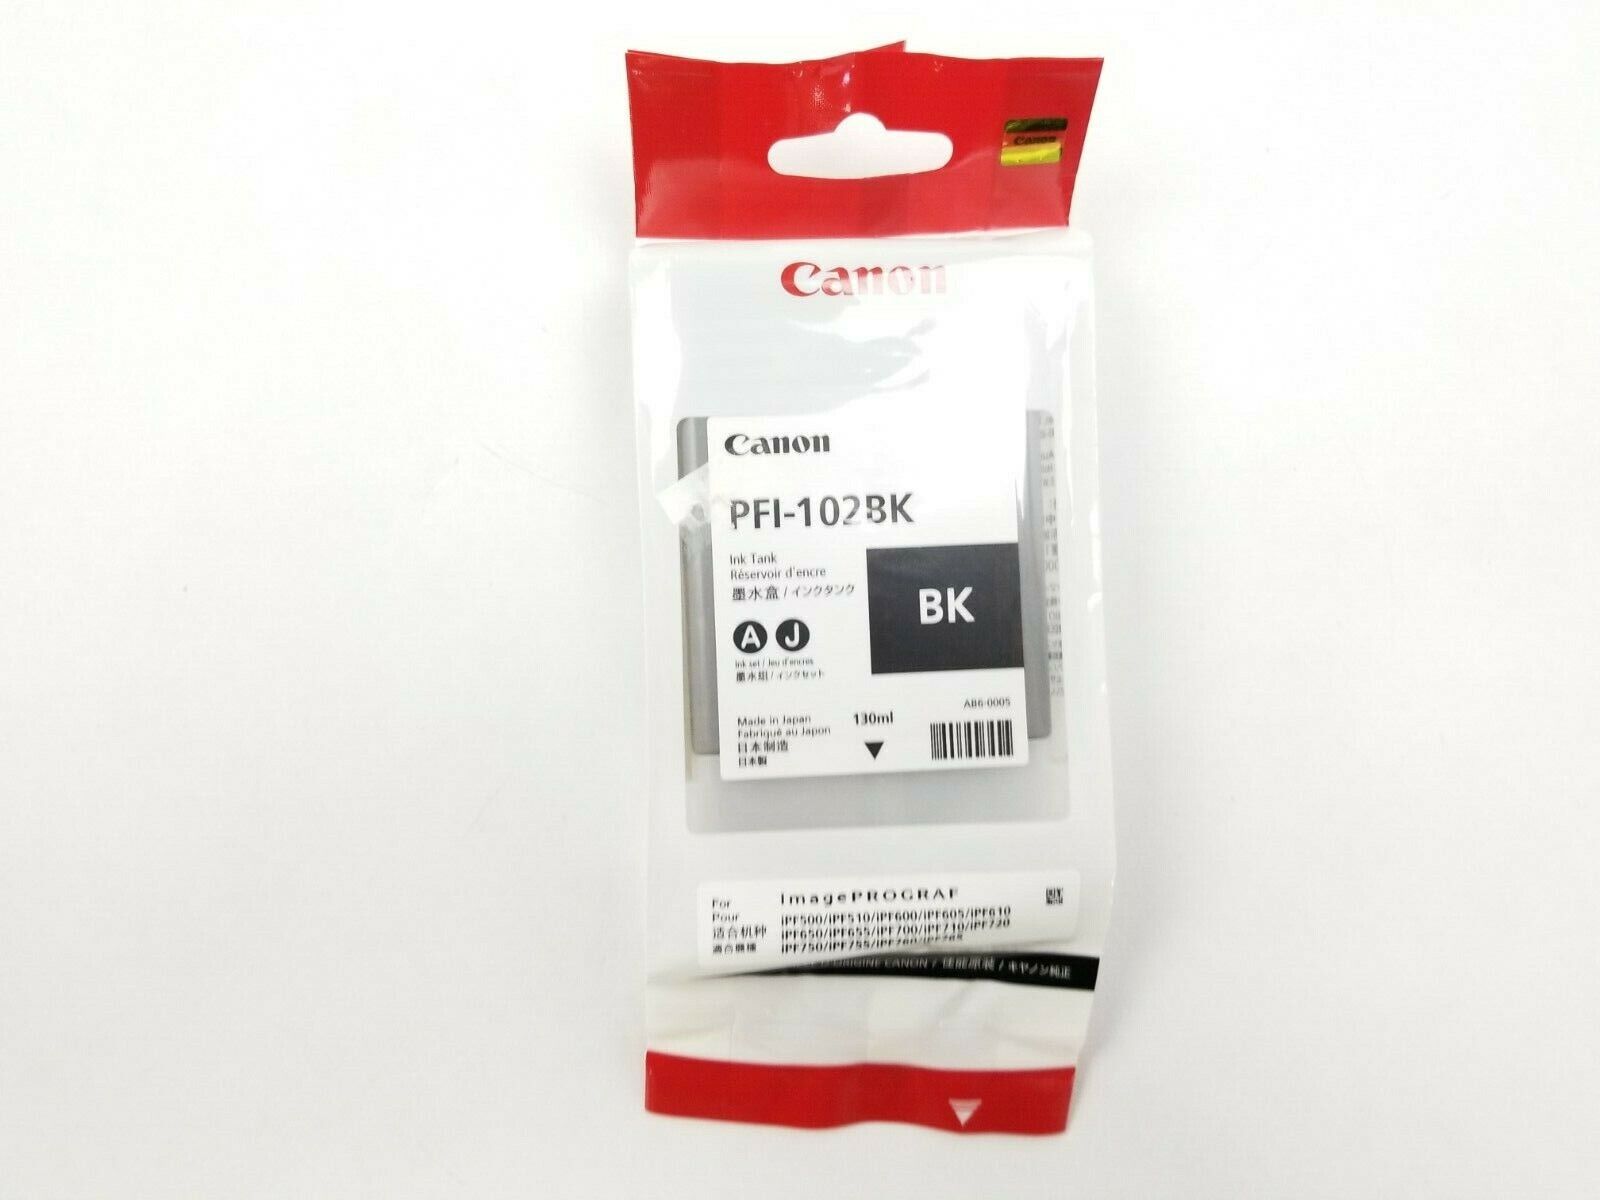 Canon PFI-102BK Black 130ML Ink Cartridge Original(OEM)SEALED EXP 7/2020 -15008